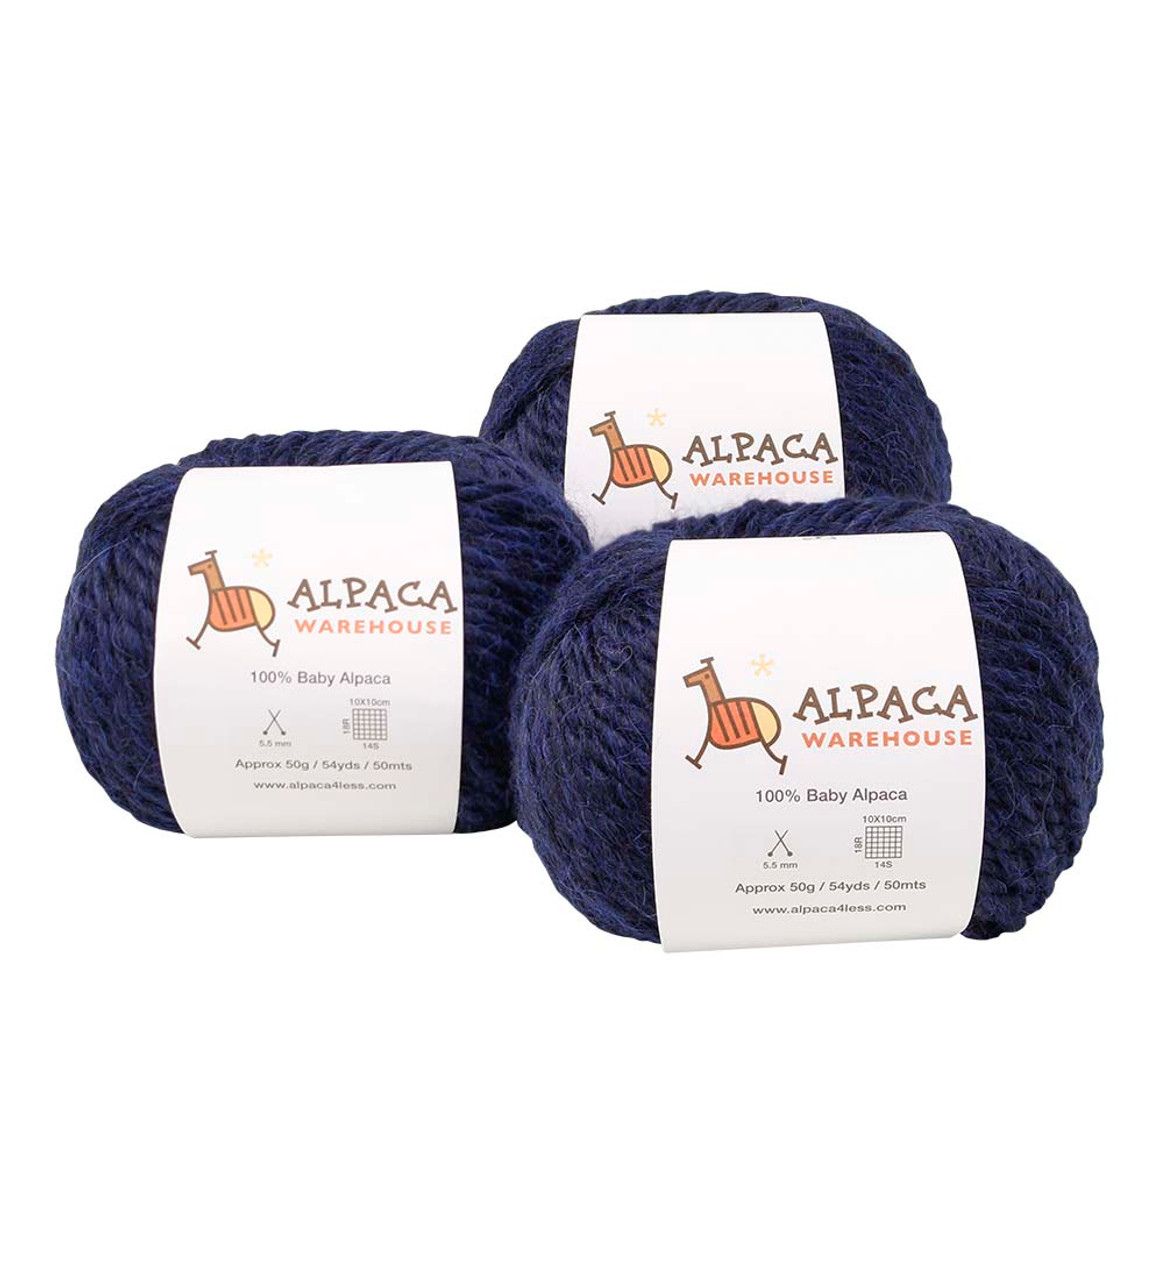 100% Baby Alpaca Yarn Luluy #3 DK - Light Worsted - 328 Yards Total (3  Pack) - AndeanSun Yarns